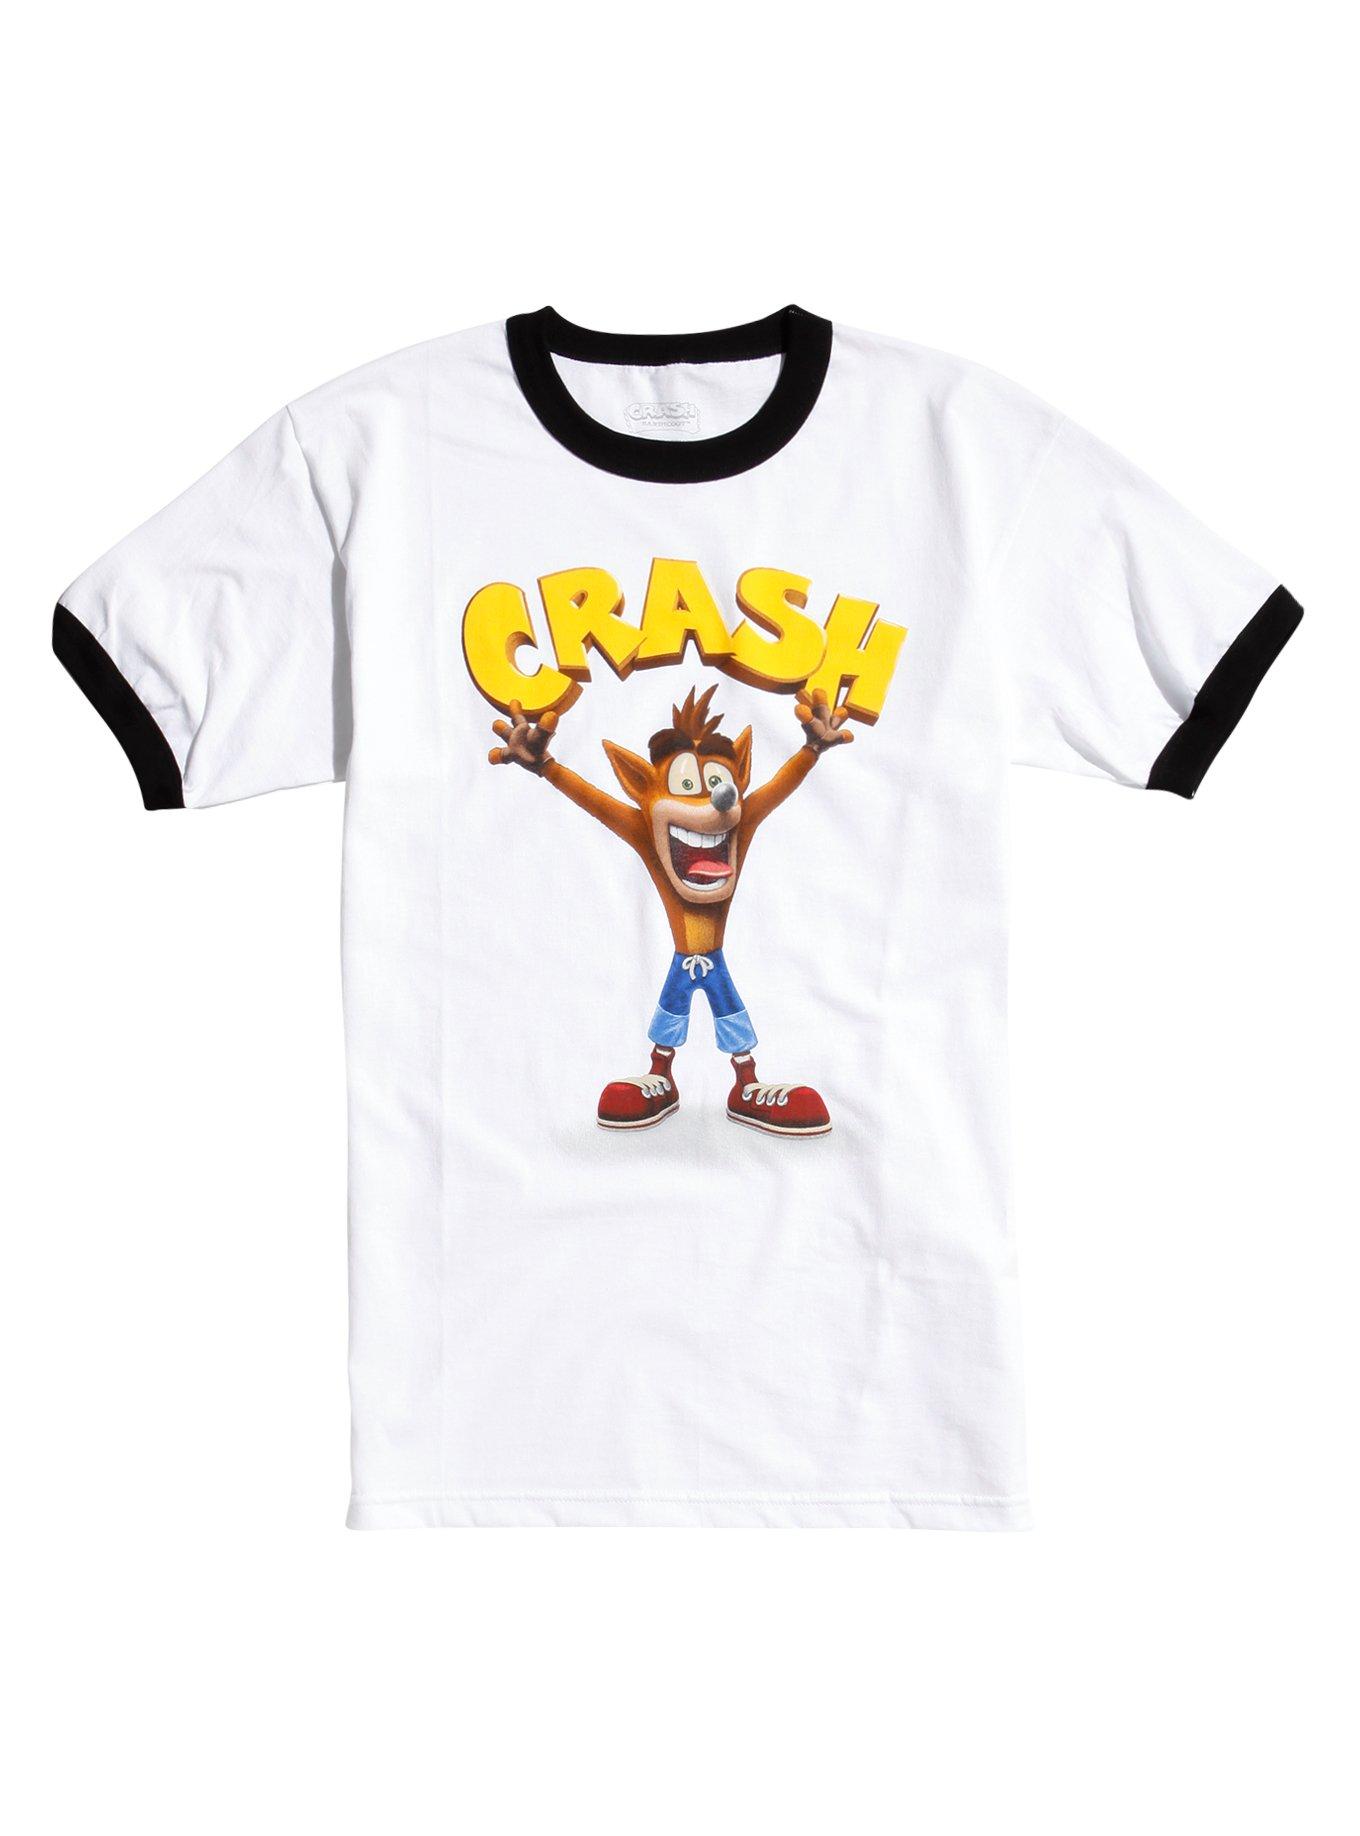 Crash Bandicoot Ringer T-Shirt, WHITE, hi-res